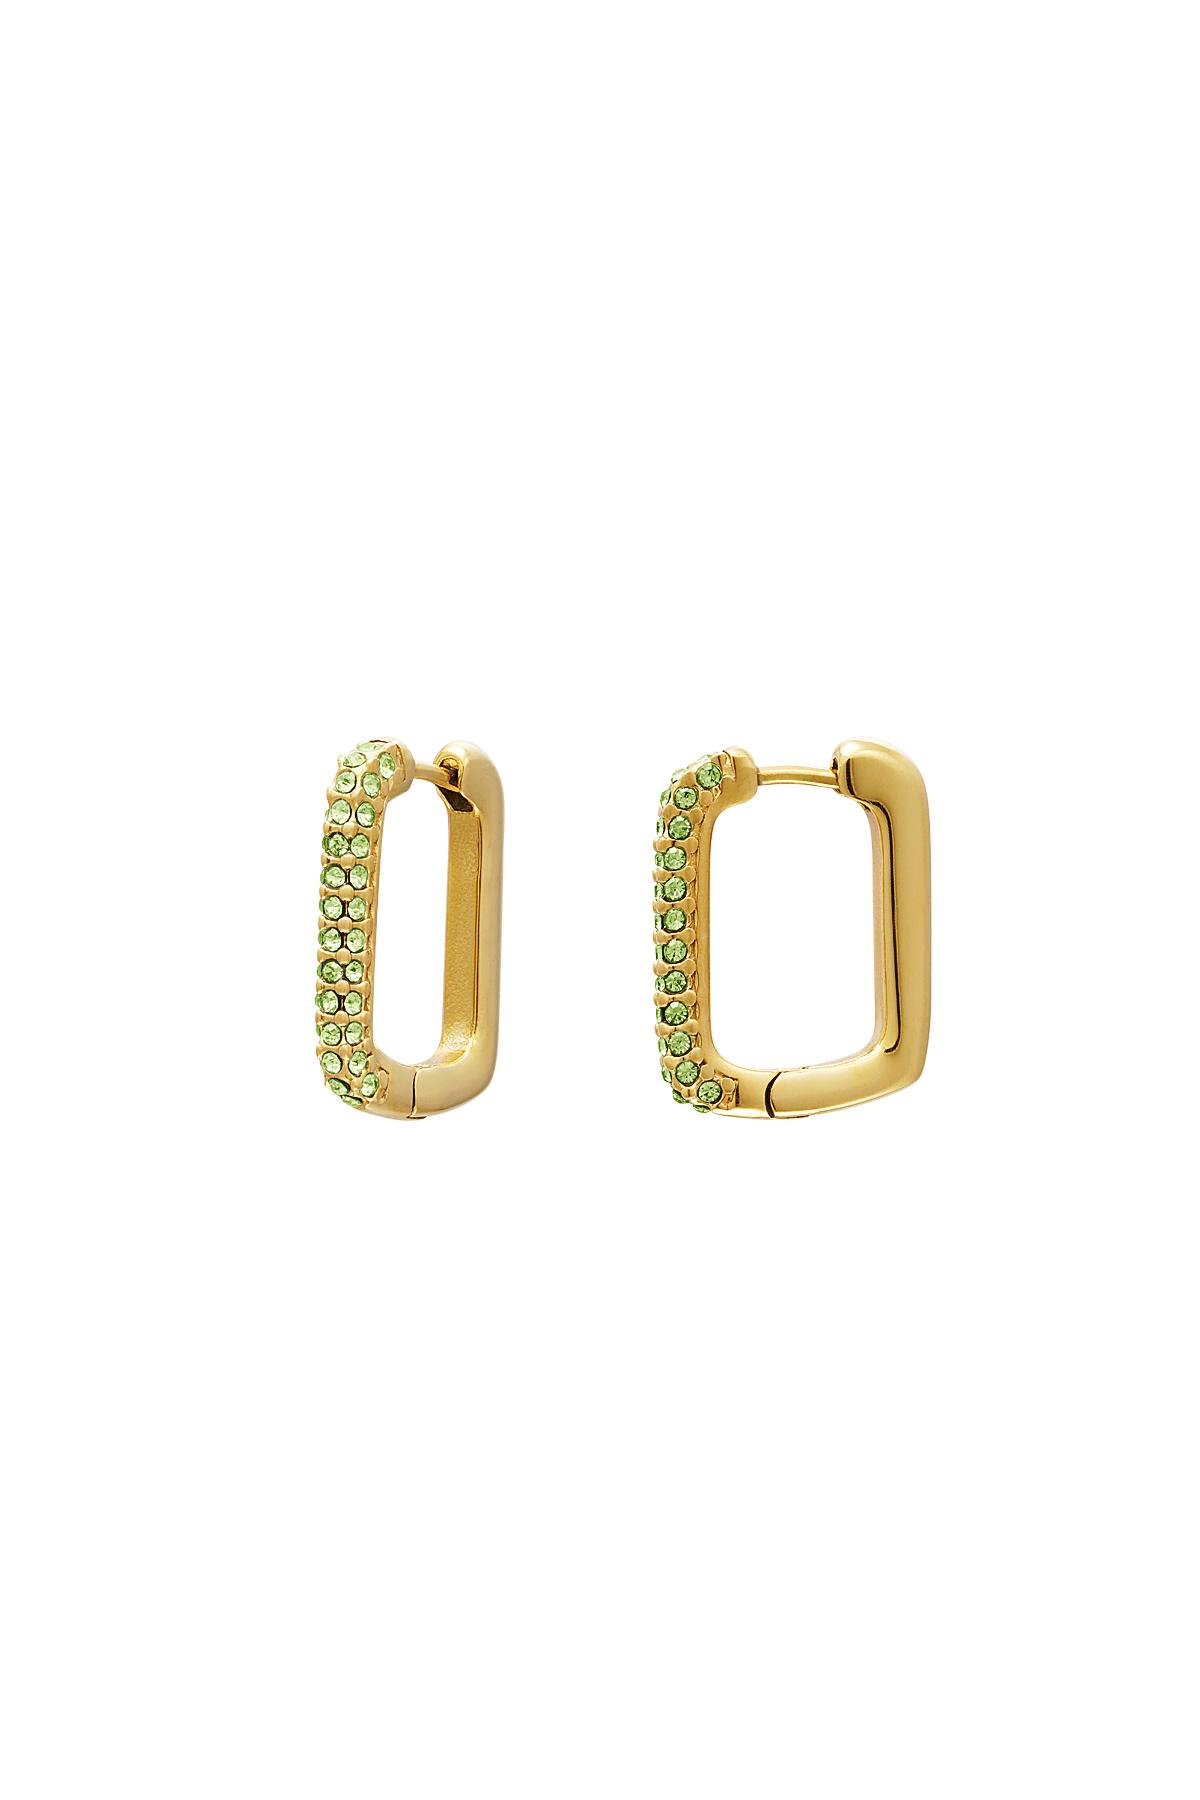 Square earrings zircon stones Green & Gold Stainless Steel 